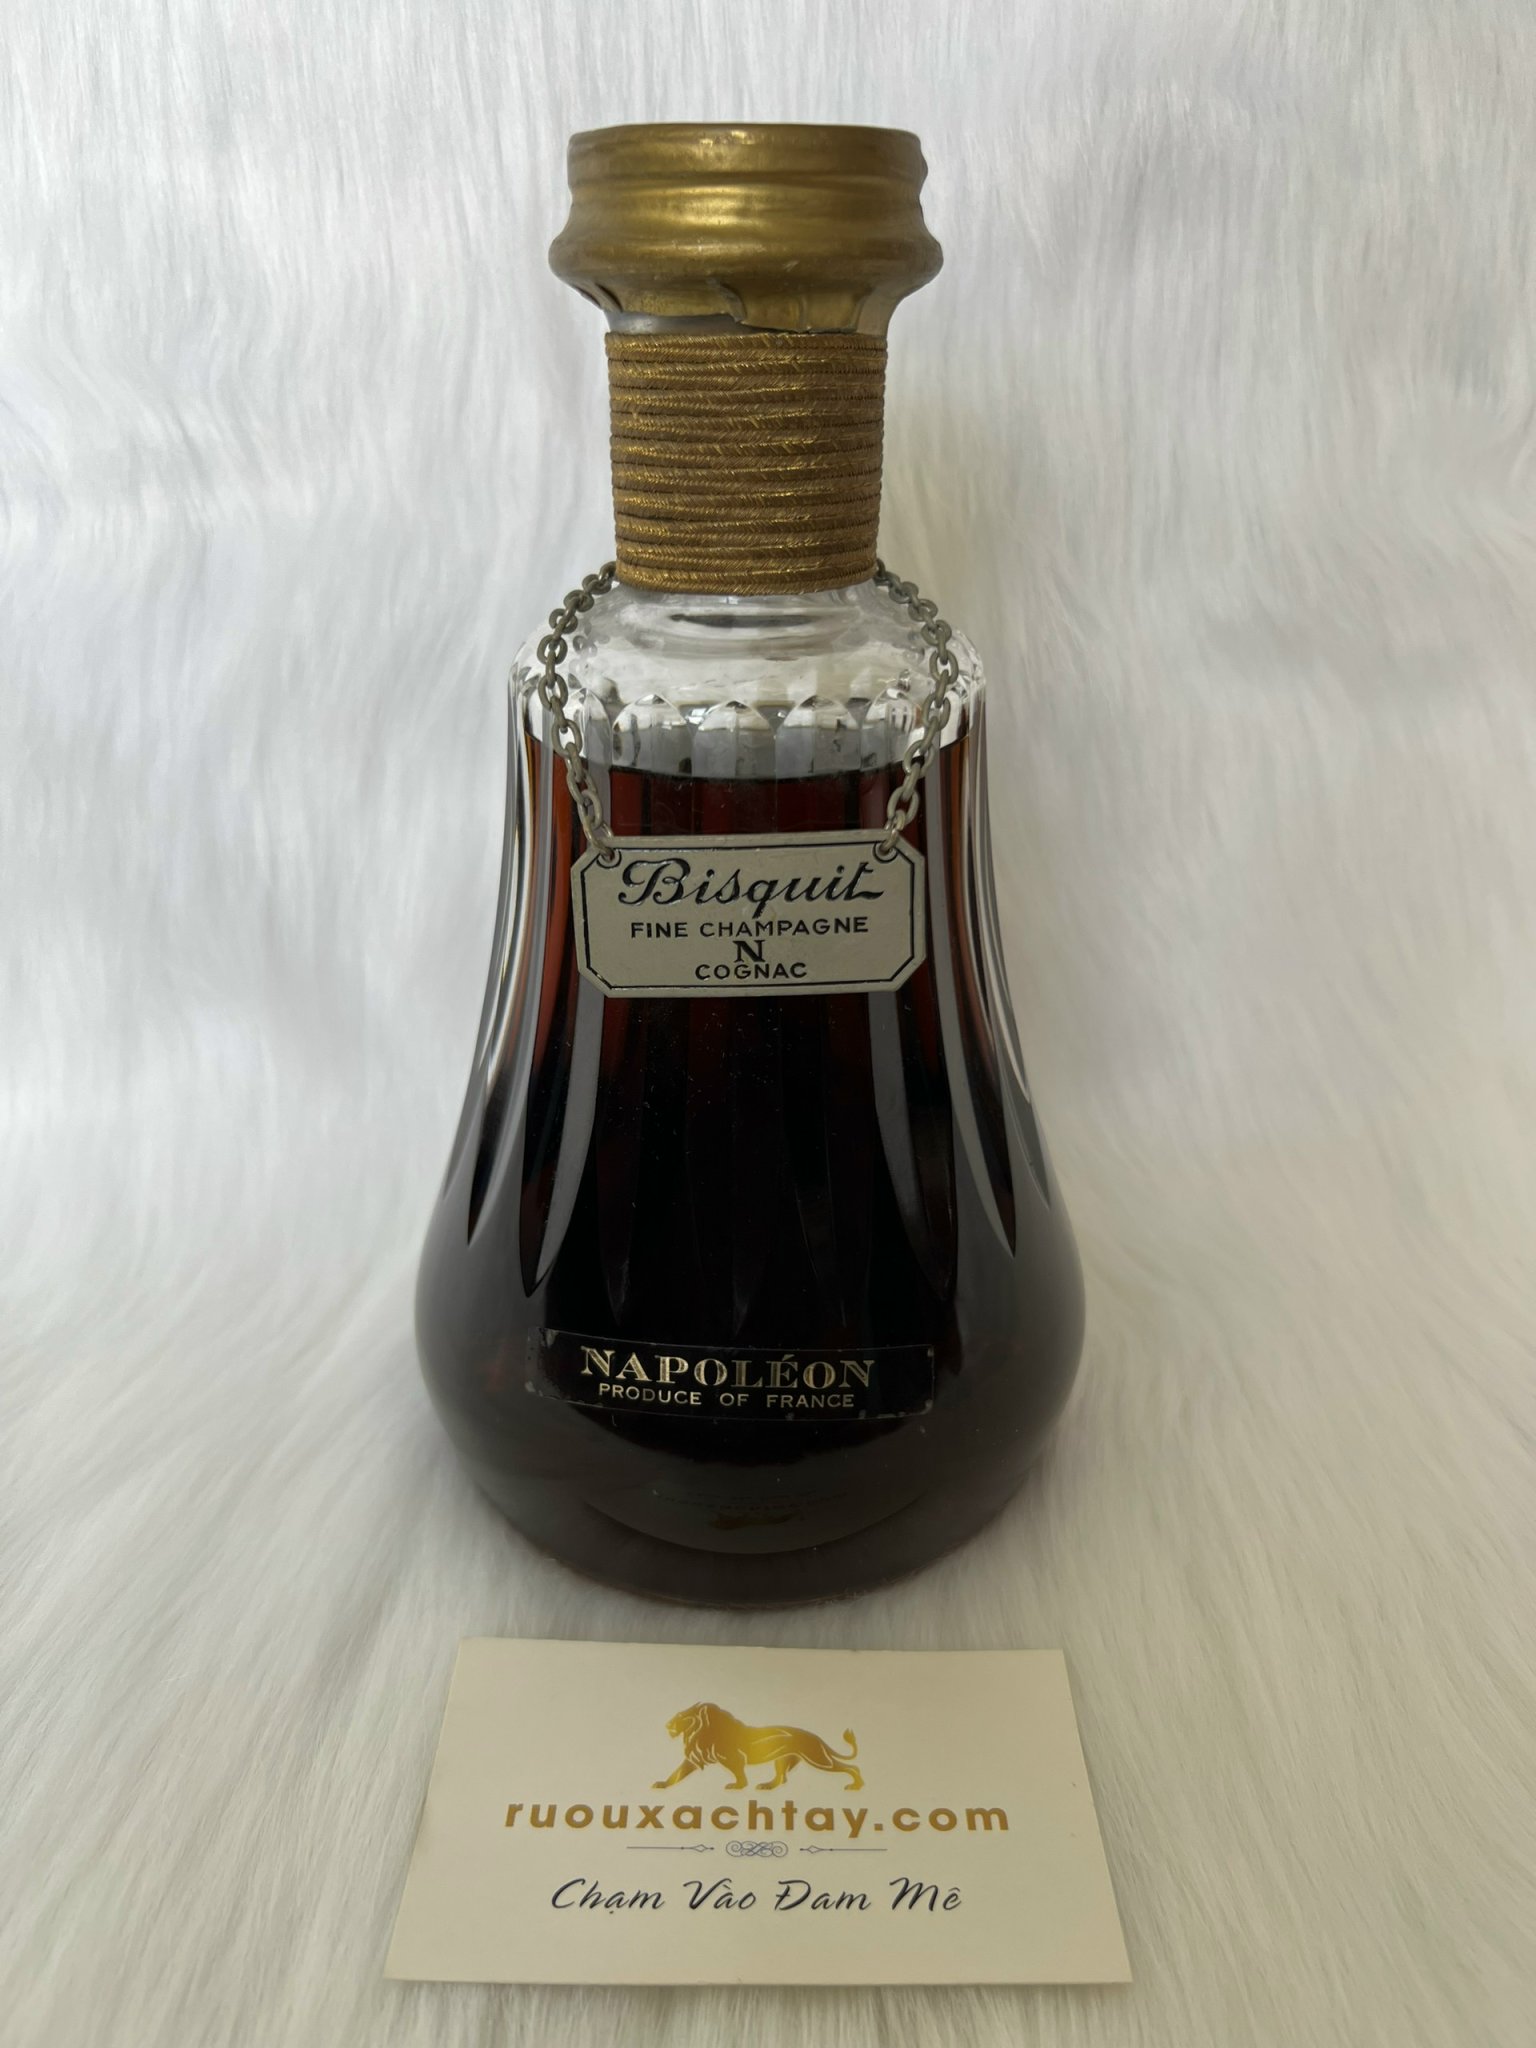 Bisquit Dubouche Cognac Baccarat - starrvybzonline.com